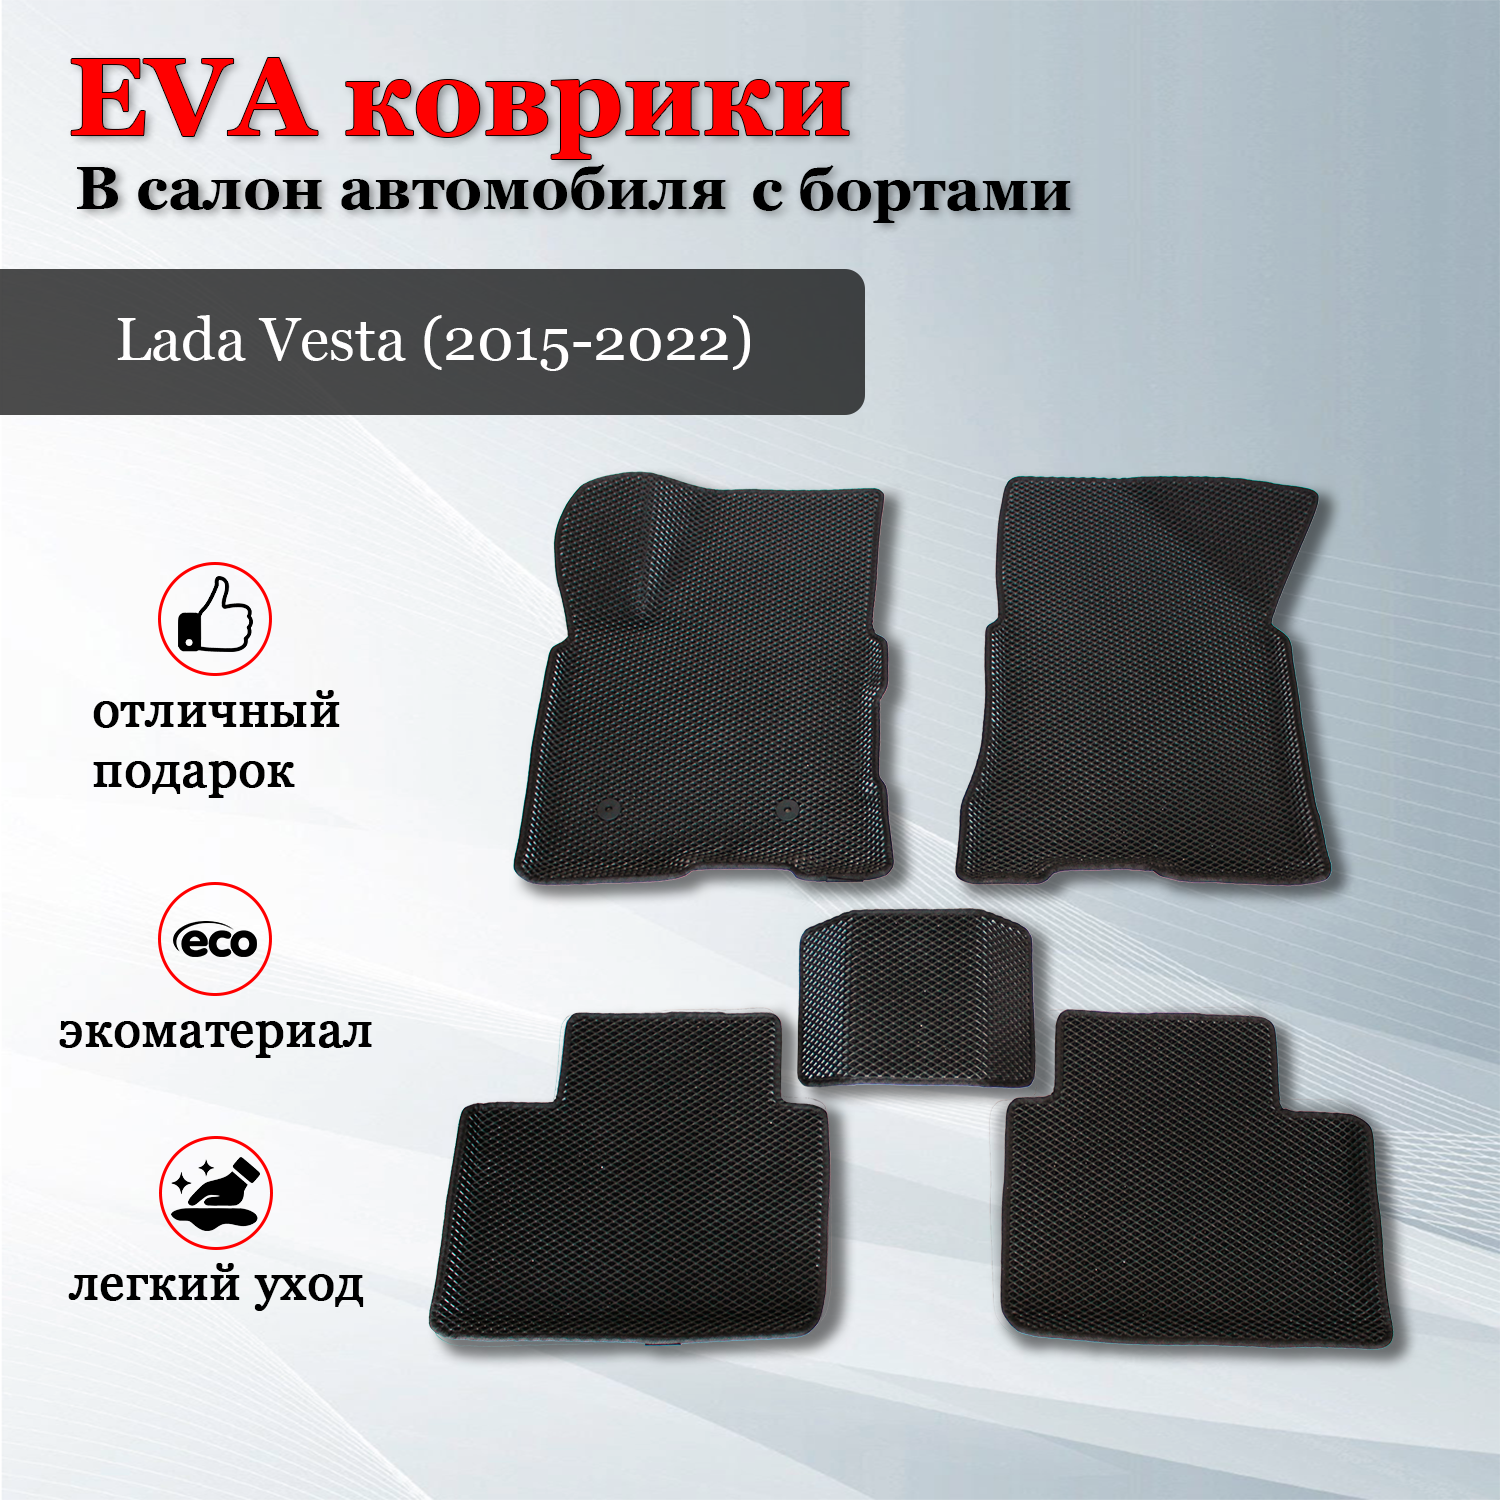 EVA (EВА, ЭВА) коврики с бортами в салон автомобиля Лада Веста / Lada Vesta (2015-2022)